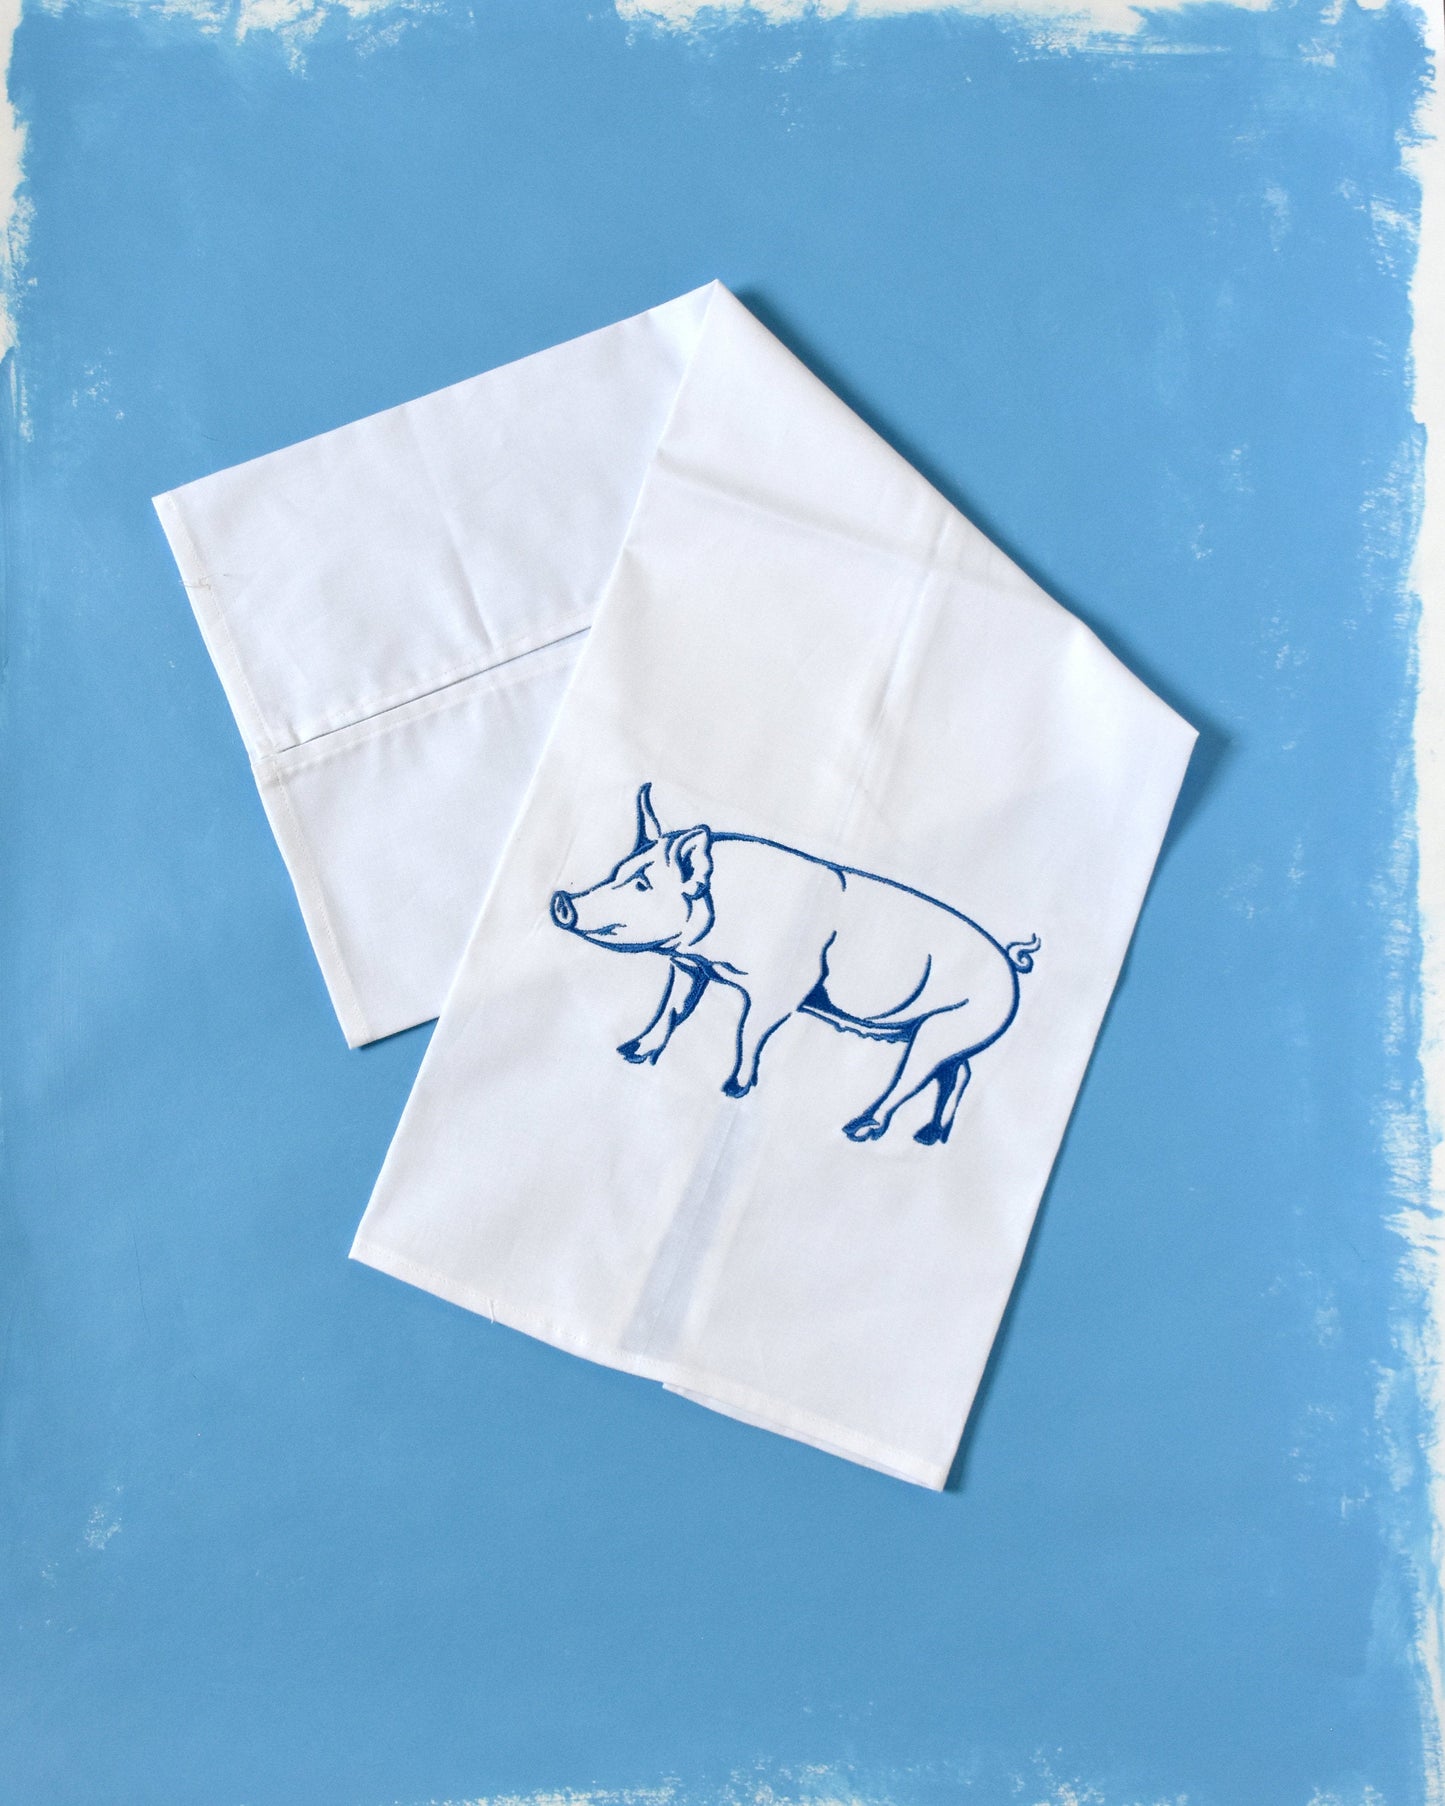 Pig Farm Country Animal Towel